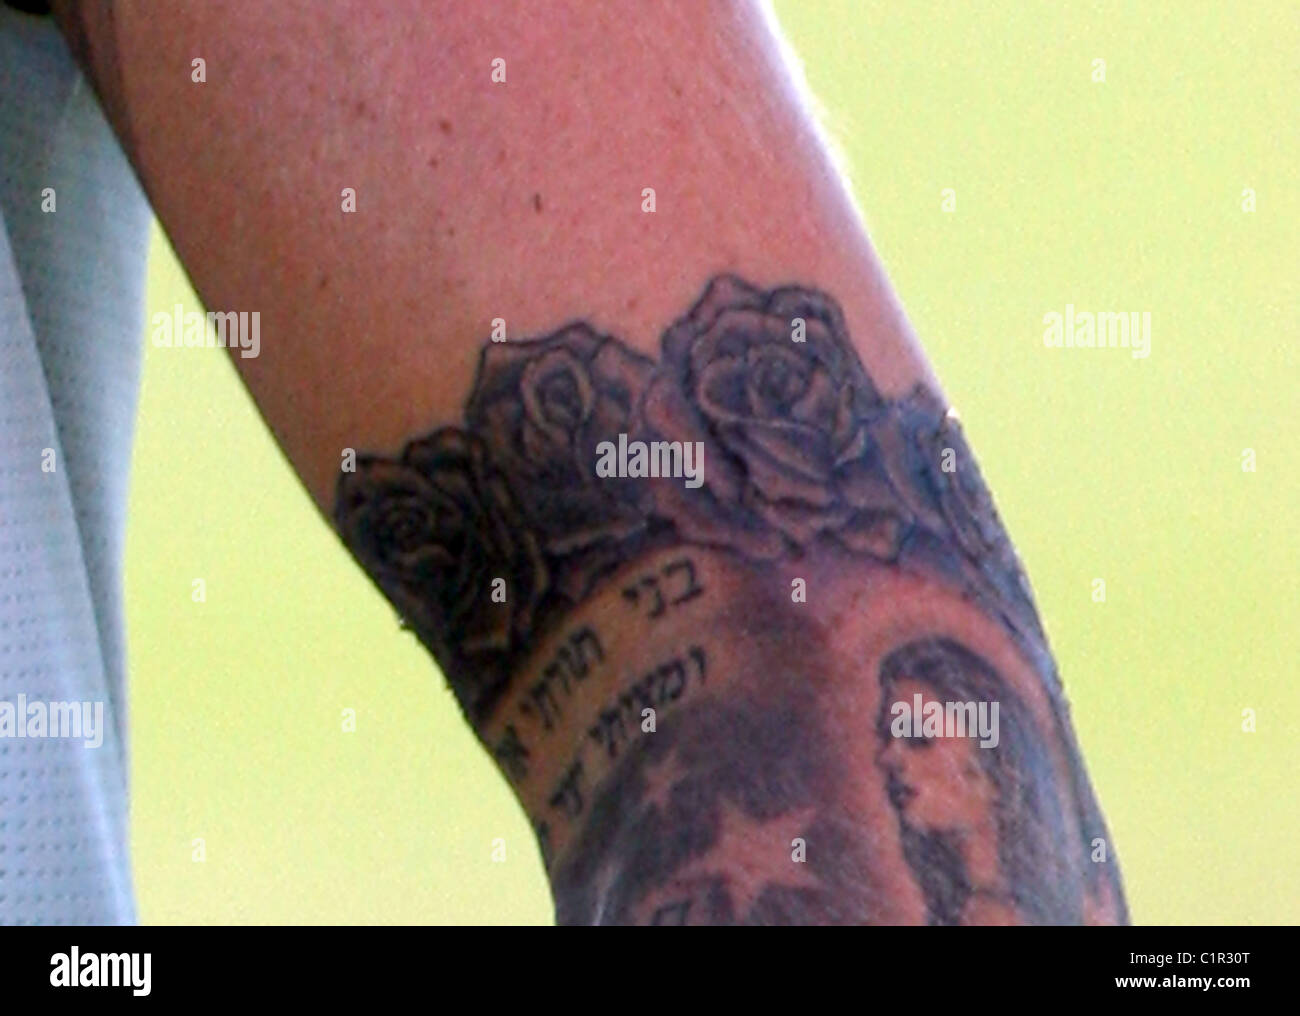 Brooklyn Beckham Debuts Massive Hand Tattoo in Honor of Nicola Peltz